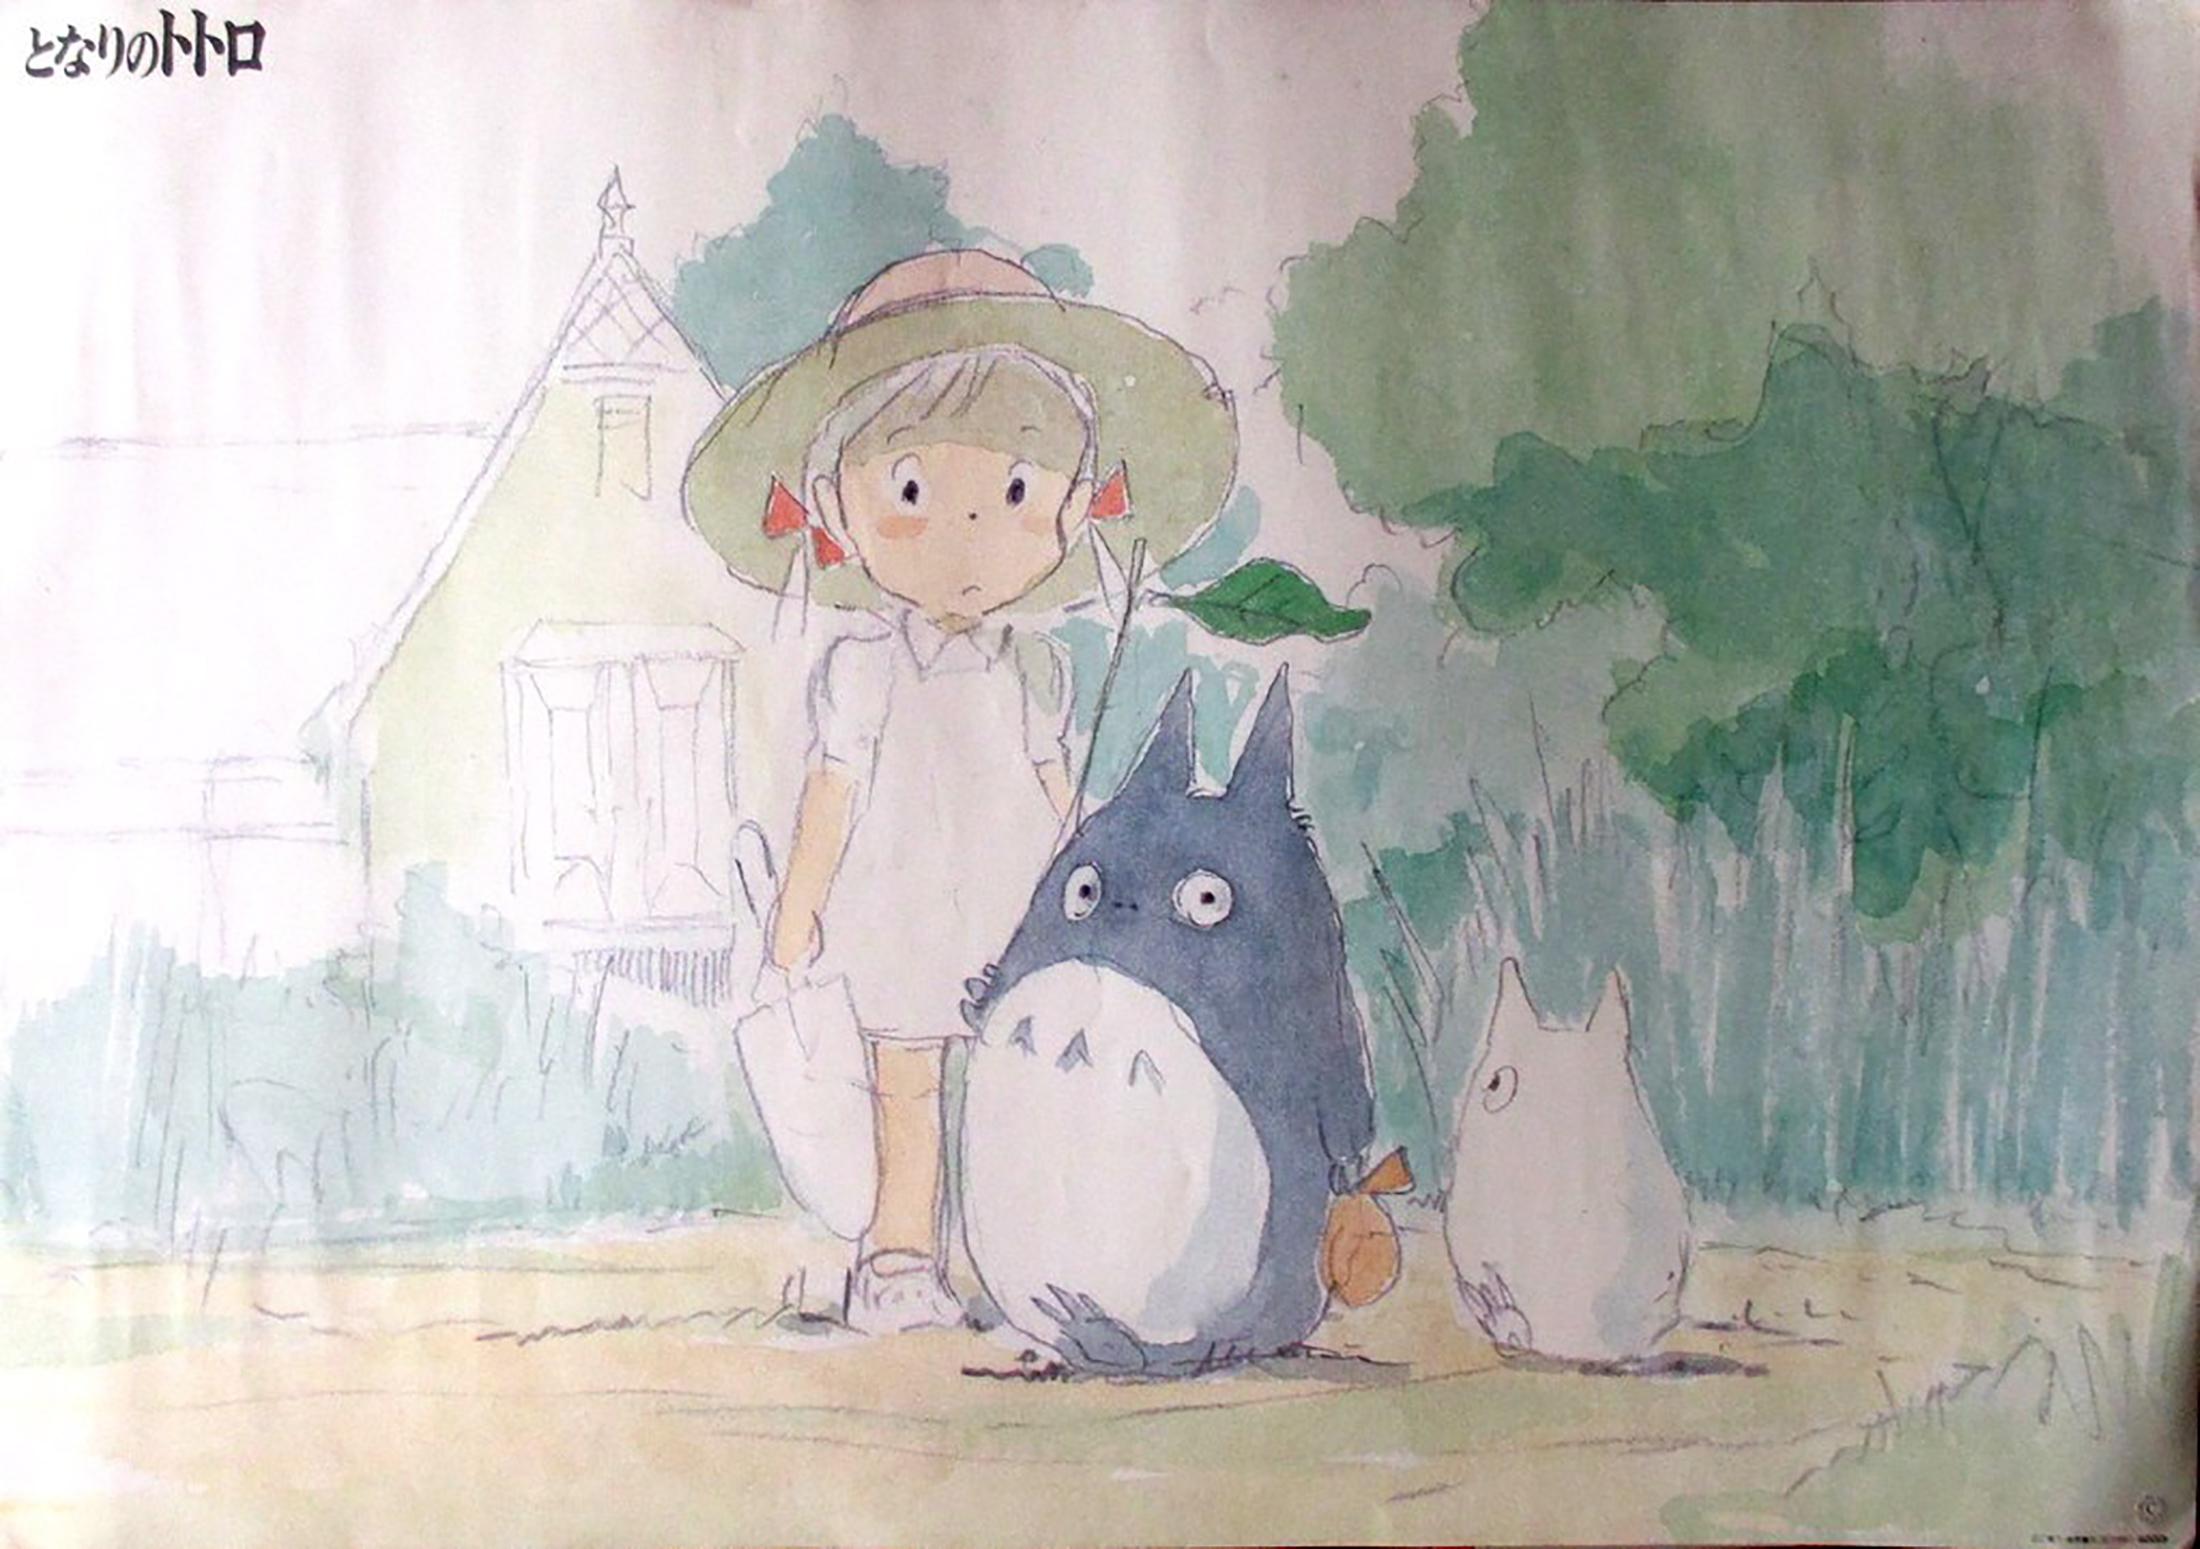 My Neighbour Totoro Original Vintage Poster, Studio Ghibli (1988), Miyazaki - Print by Unknown